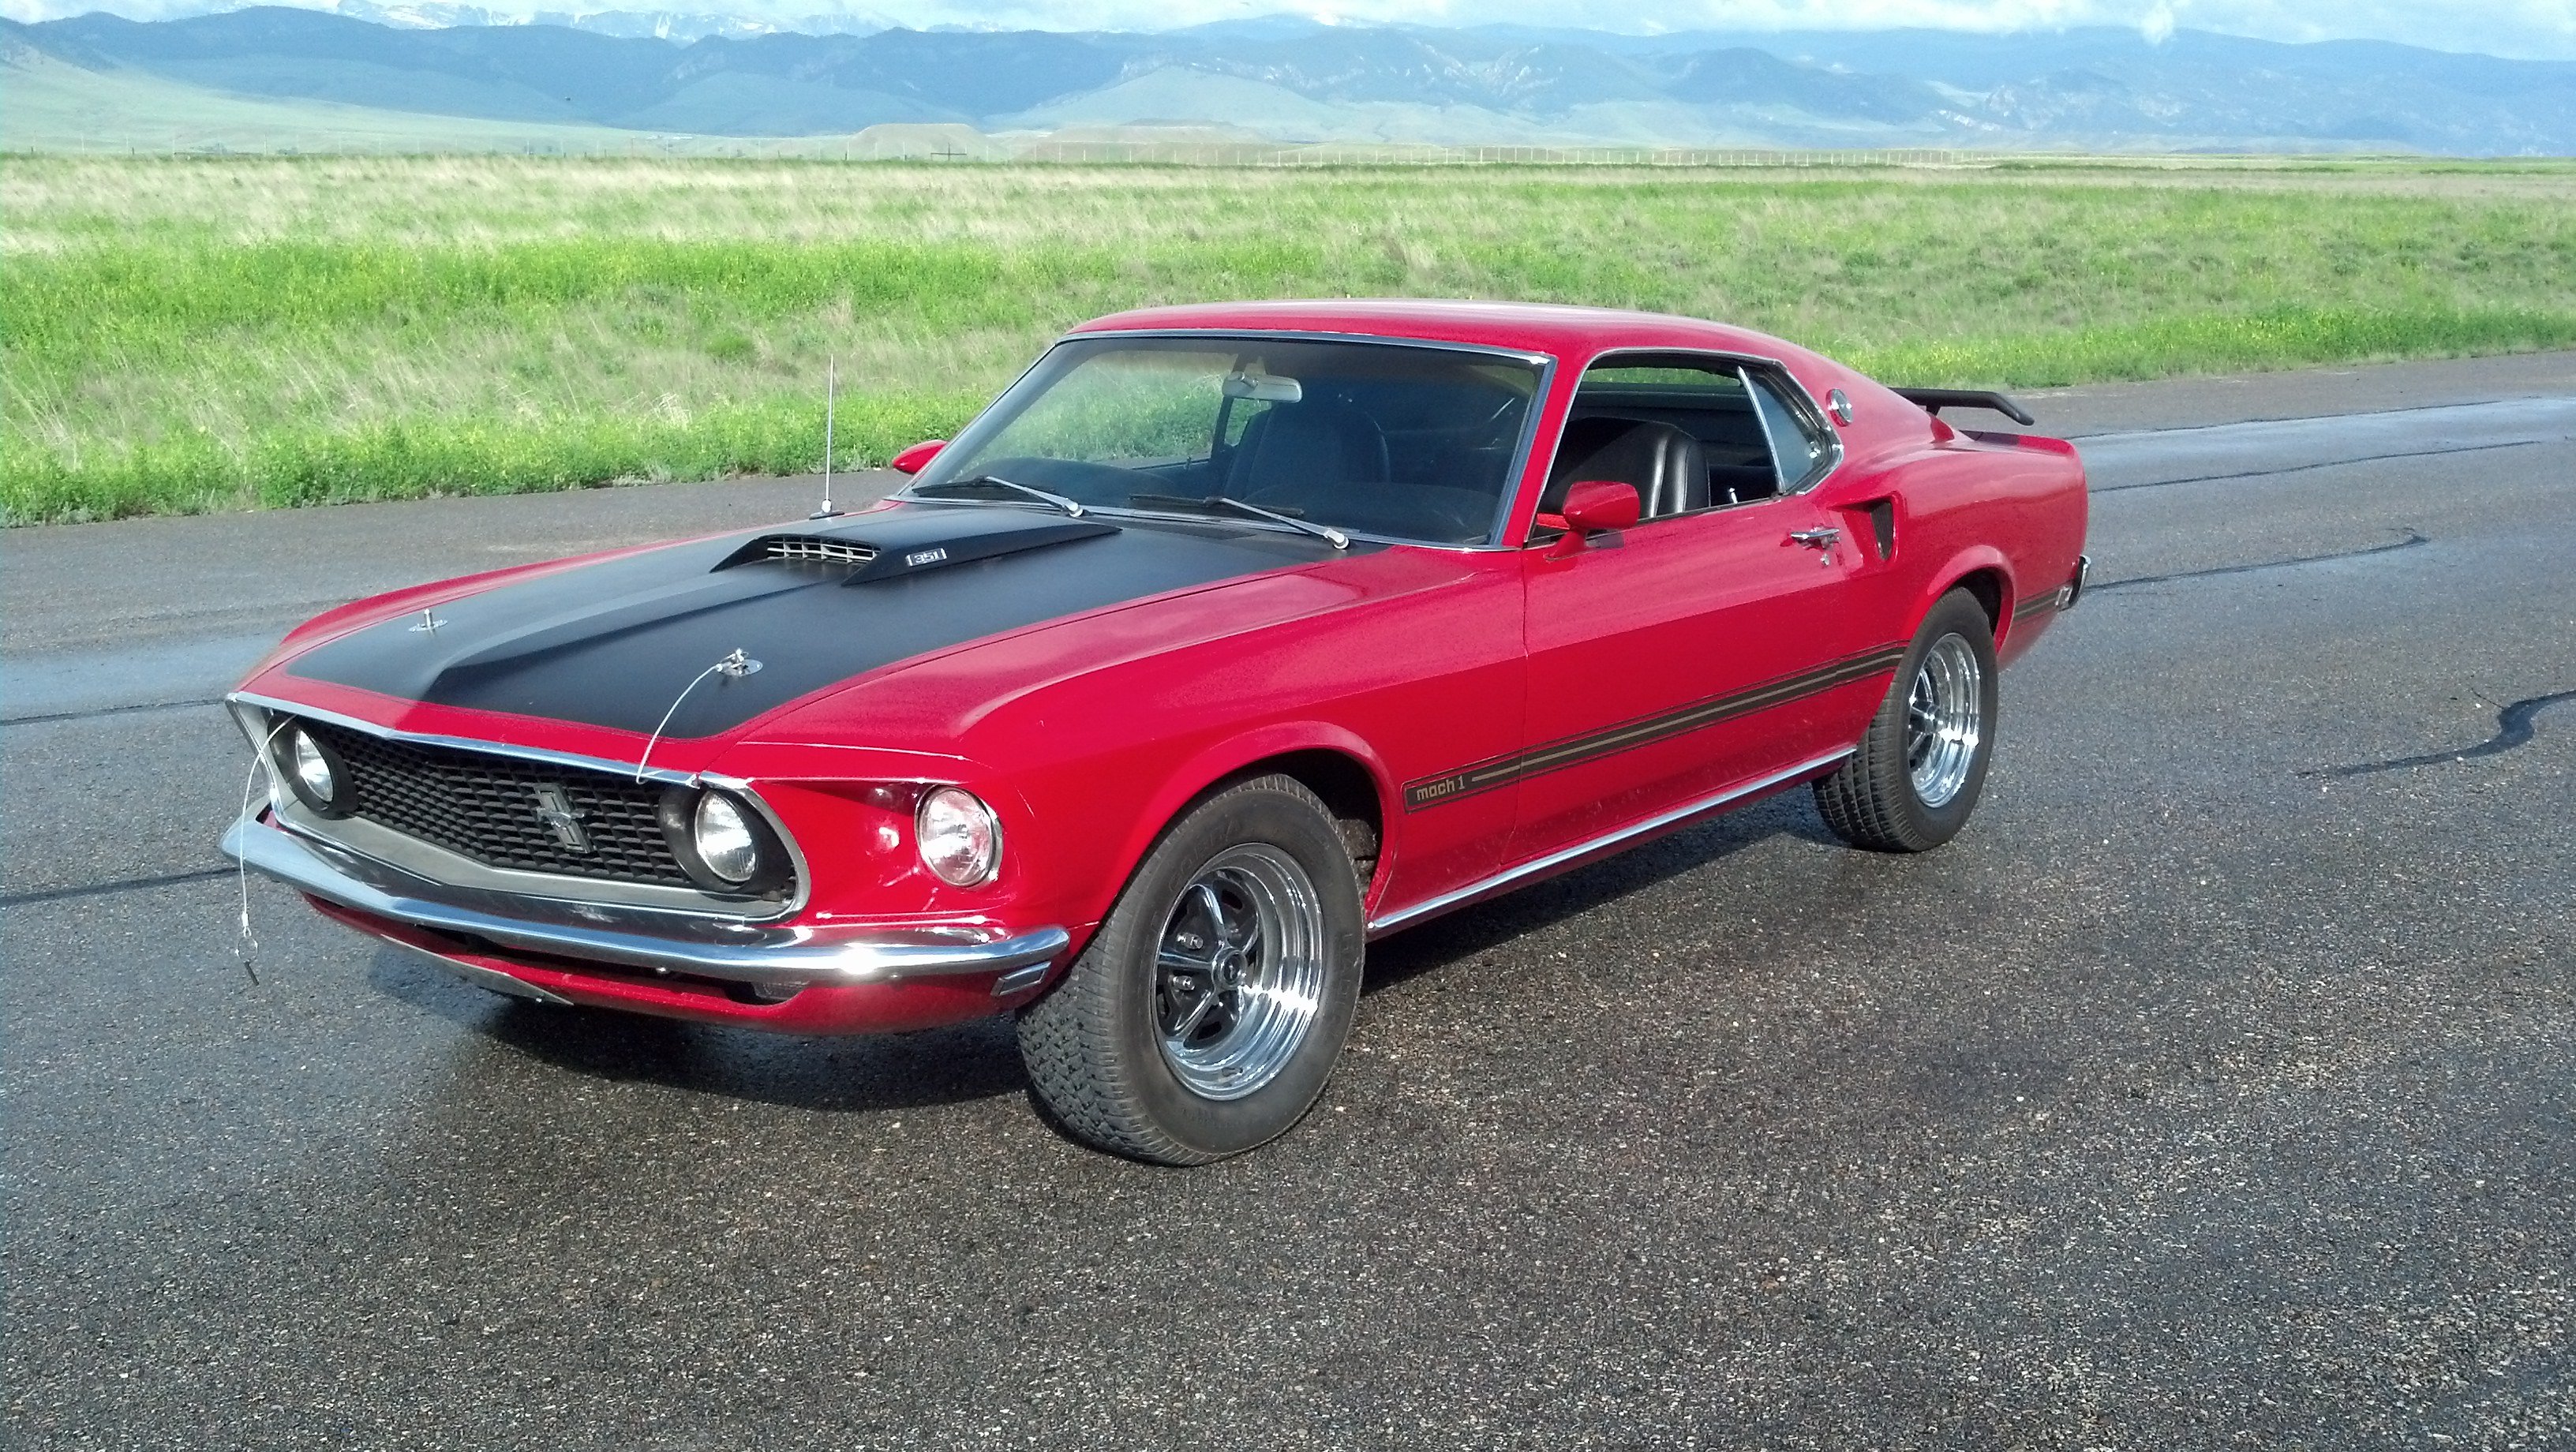 1969 Mustang Fastback Wallpaper